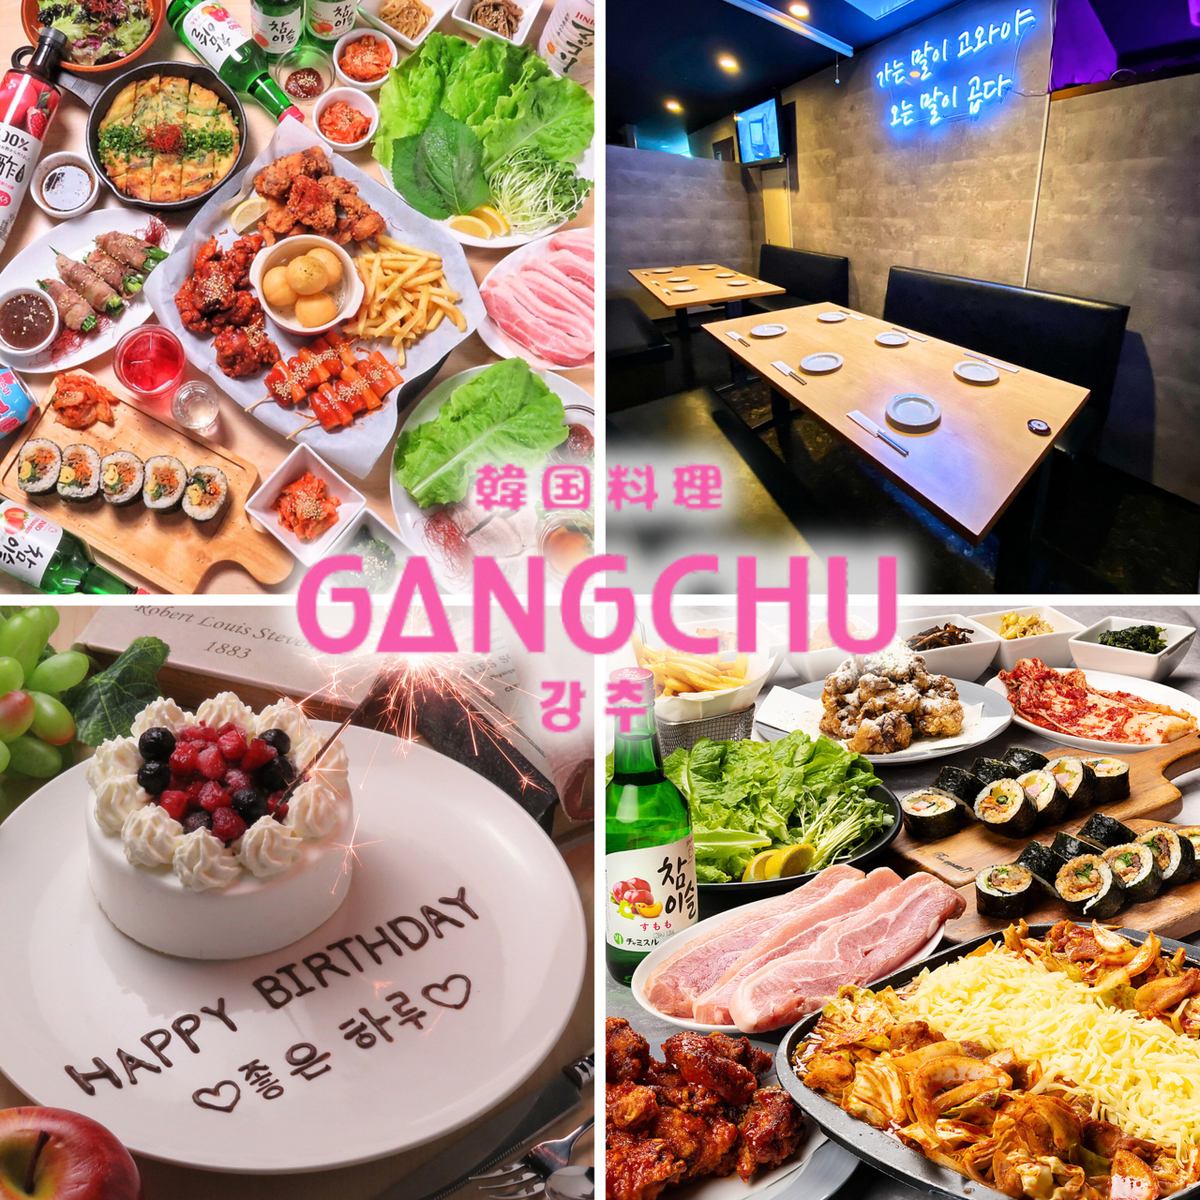 A stylish Korean restaurant where you can enjoy trendy Korean cuisine while listening to music videos of modern k-pop singers